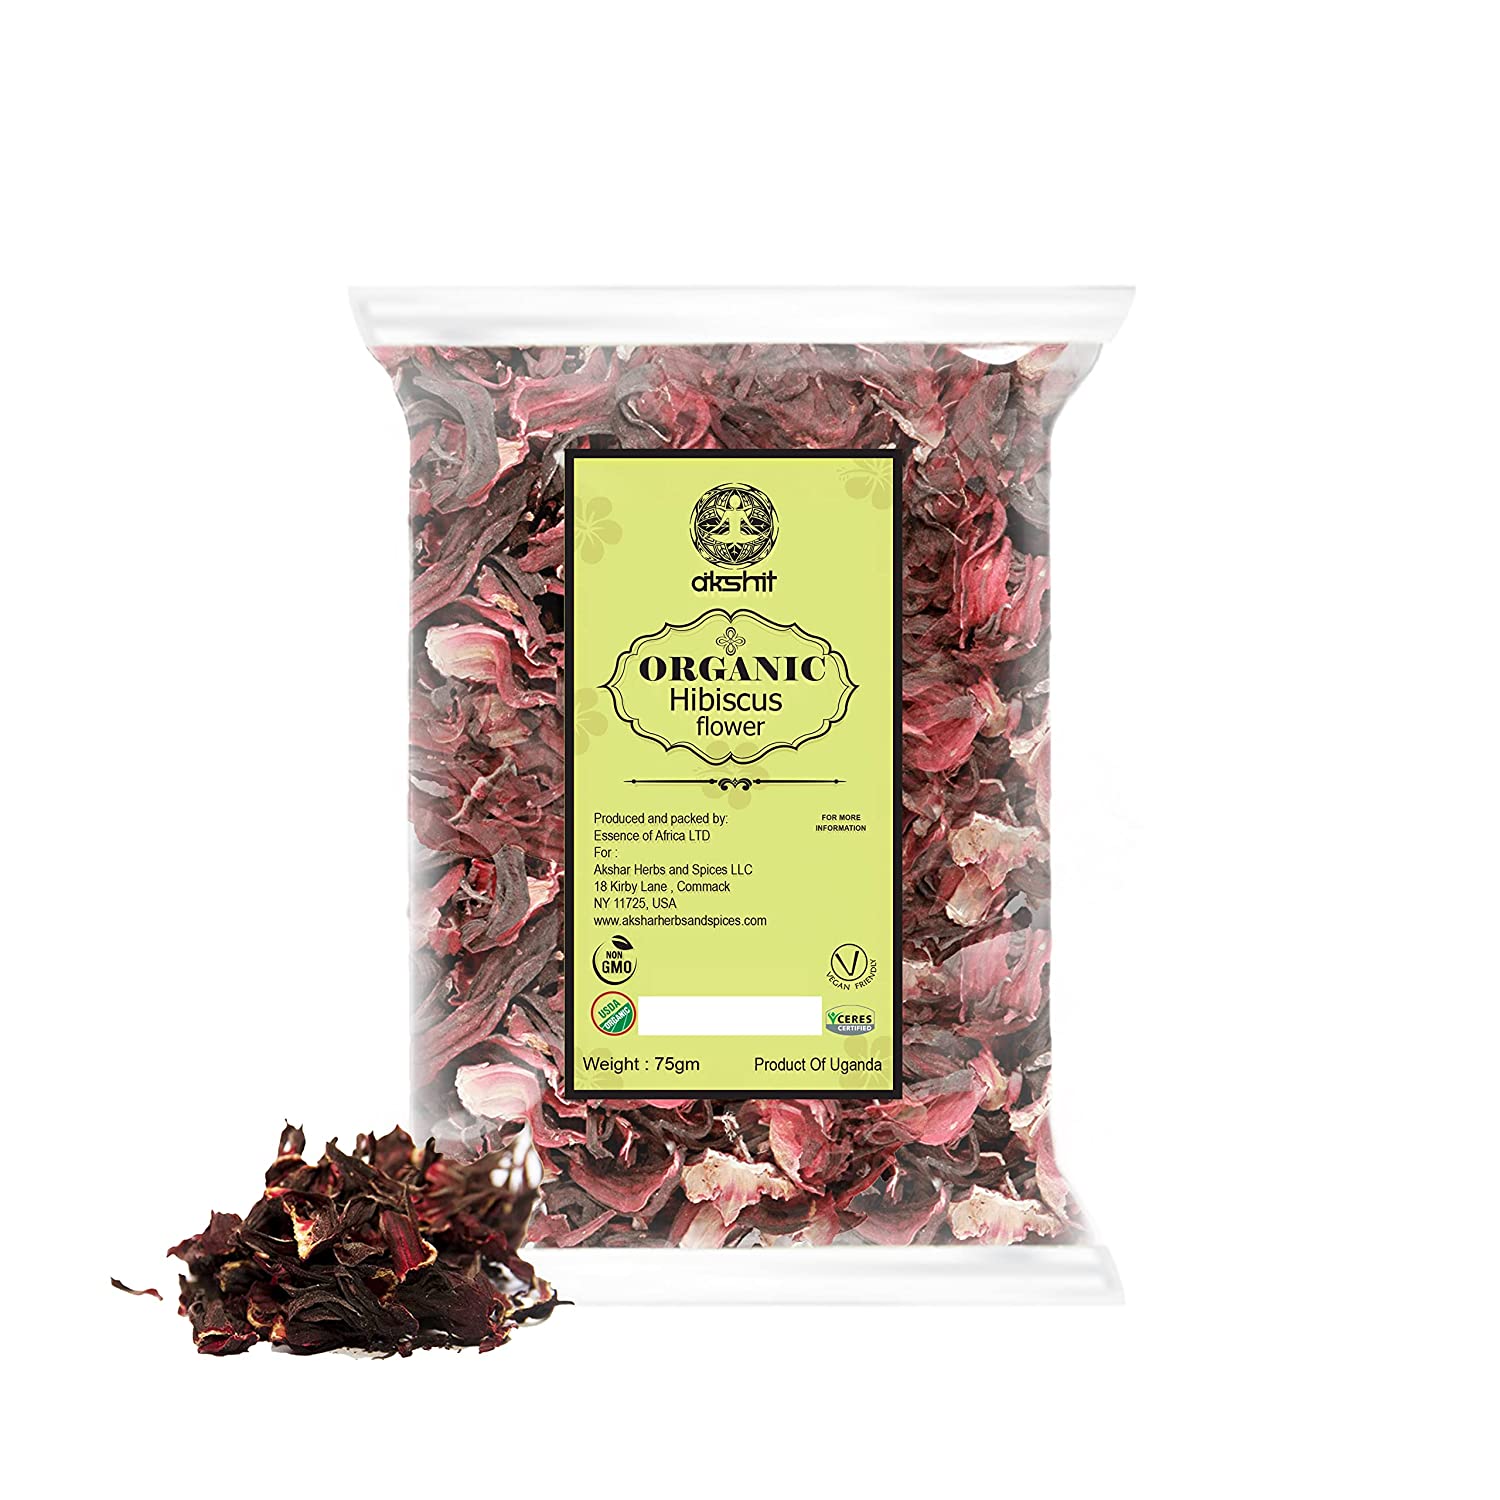 Akshit Dried Hibiscus Flowers,2.6oz, Herbal Tea, Flor de Jamaica, Hibiscus  Flower/Petals, Certified Organic, Flower Tea, NON-GMO, Gluten-Free.